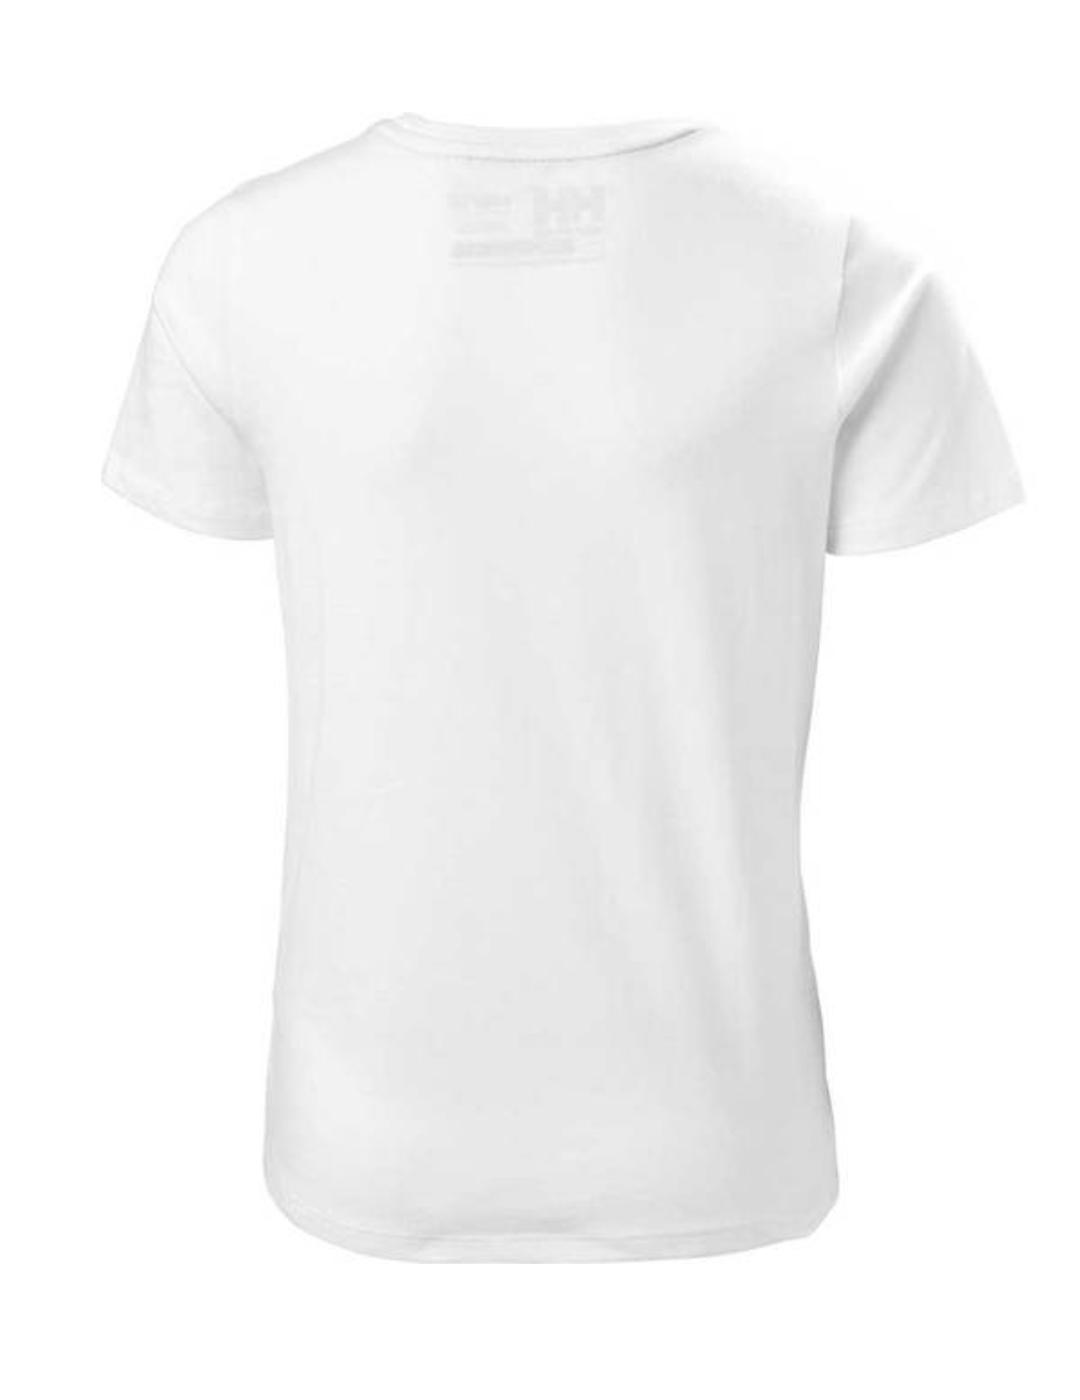 Camiseta Helly Hansen Kids Logo blanca manga corta unisex